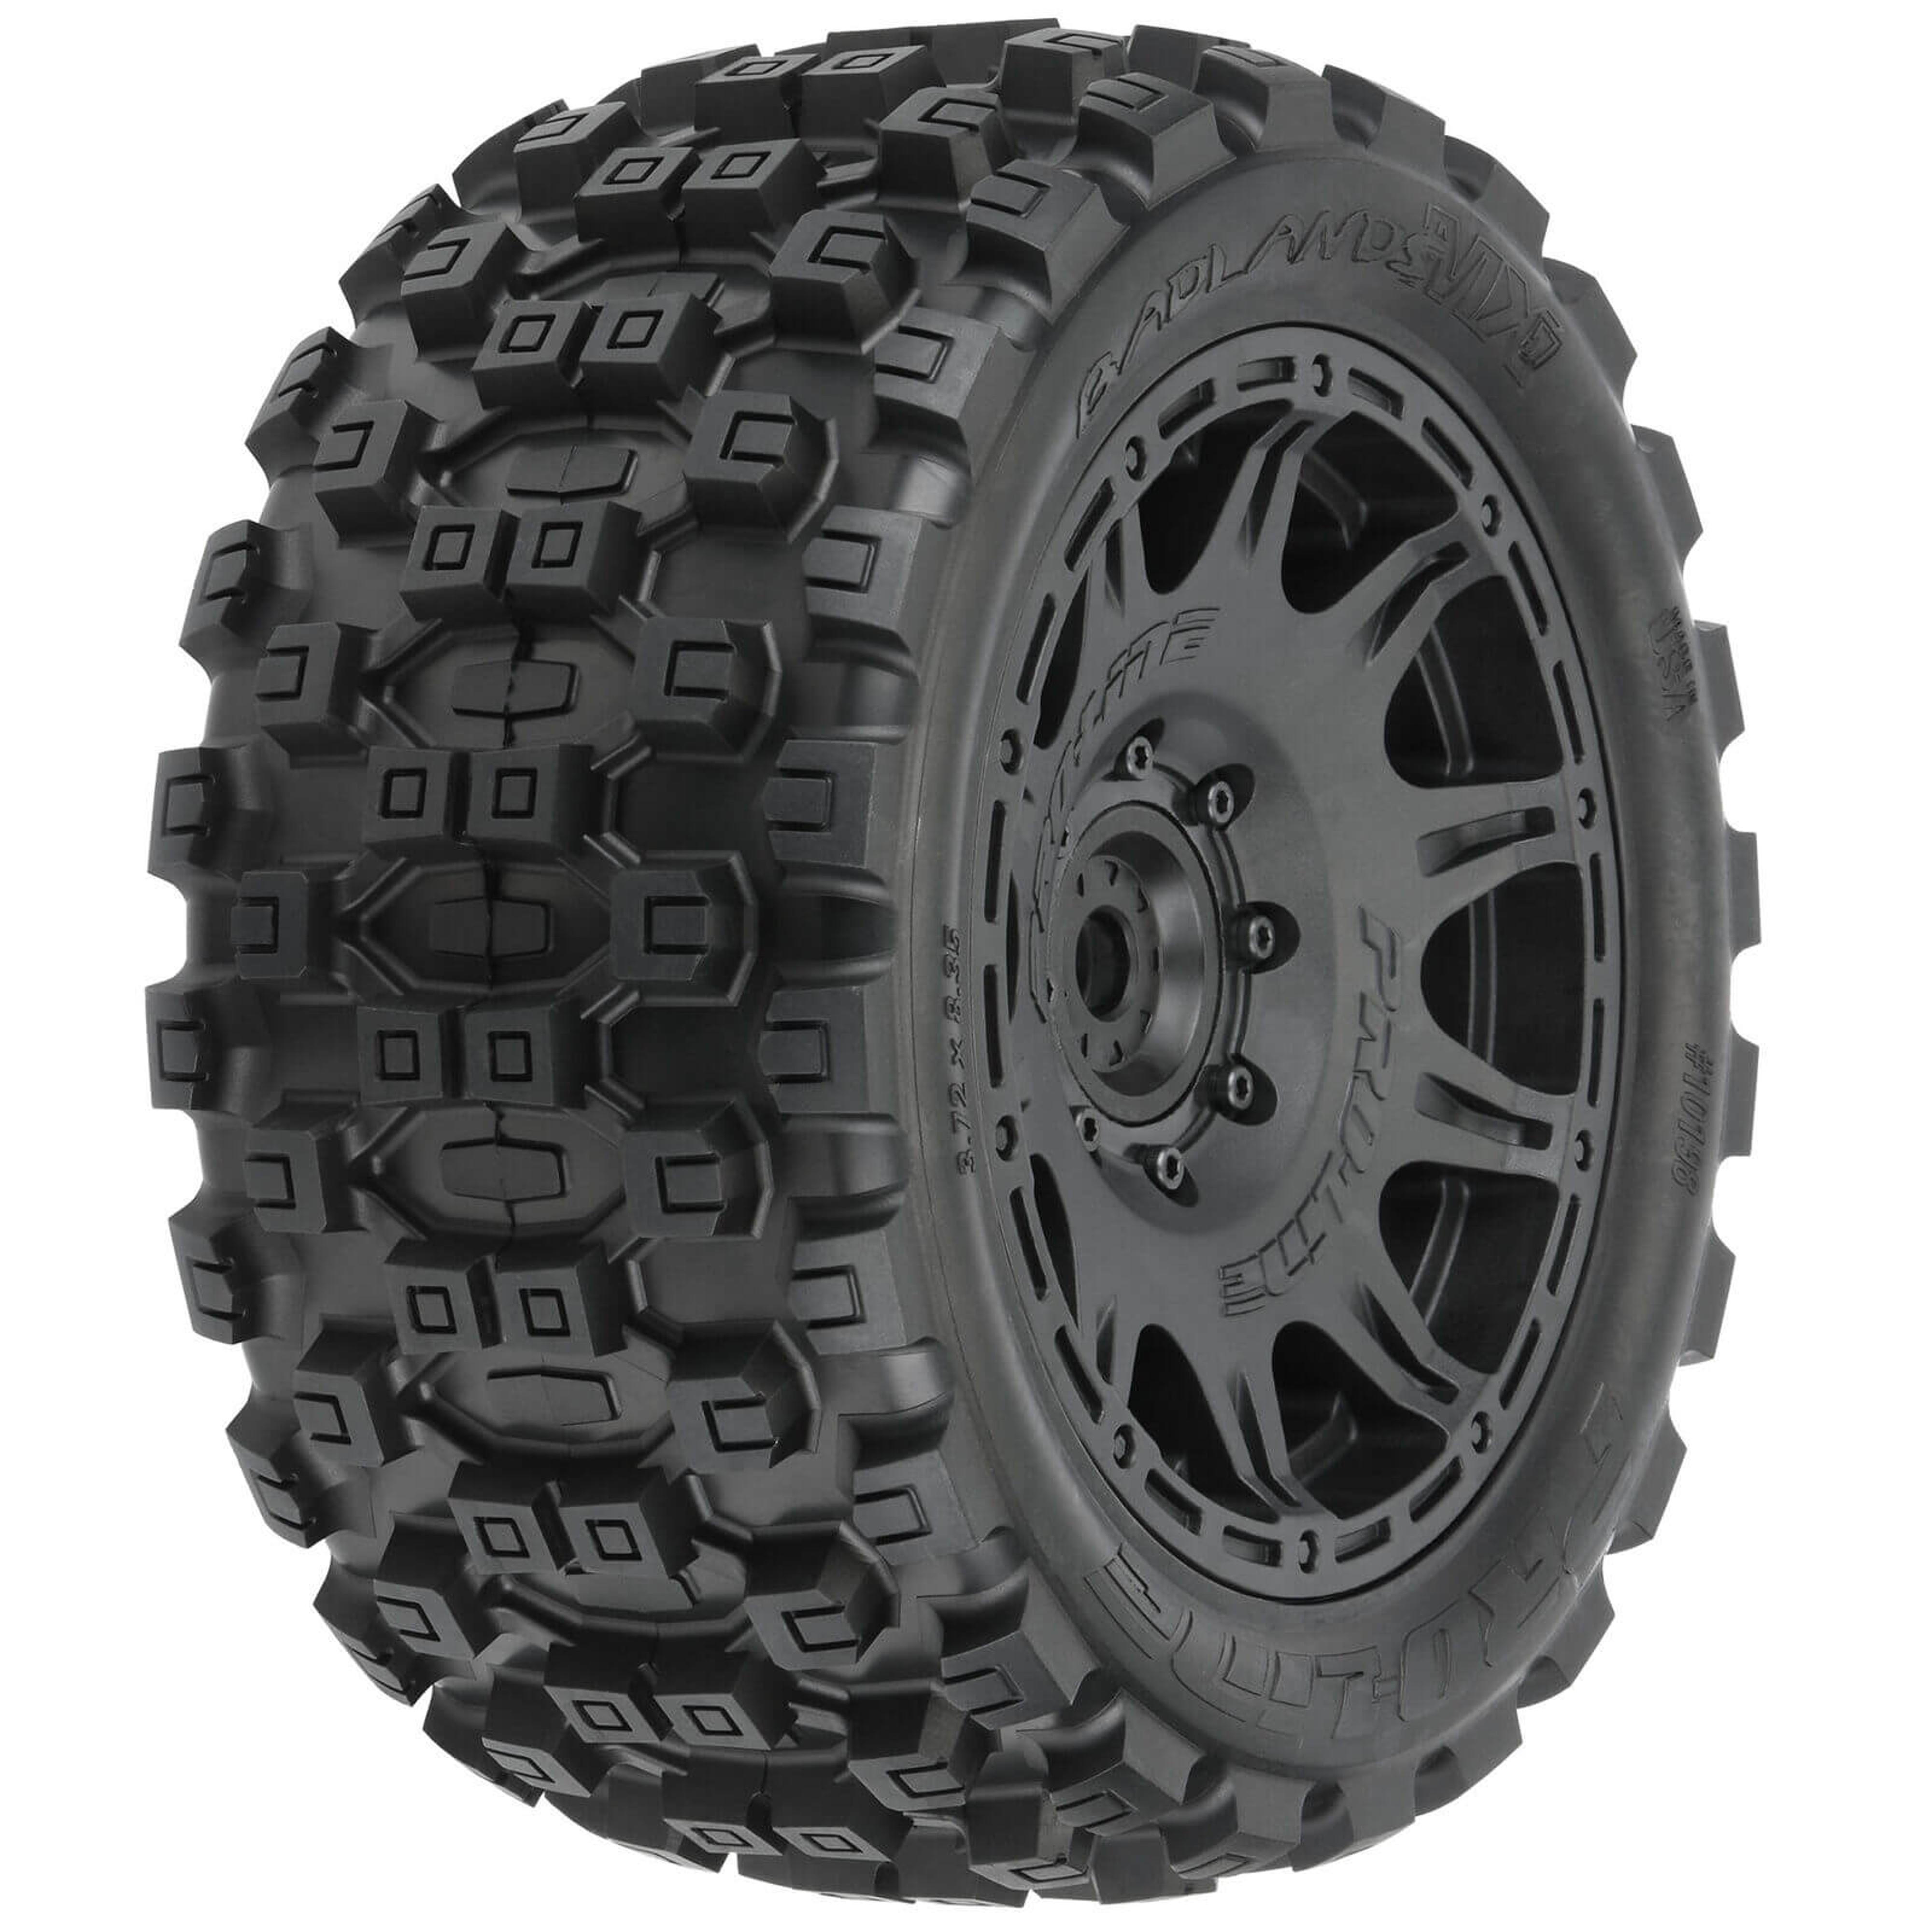 Pro-Line Badlands MX57 Fr/Rr 5.7in Tires, MTD Raid 8x48 24mm Hex Wheels (1 pair)